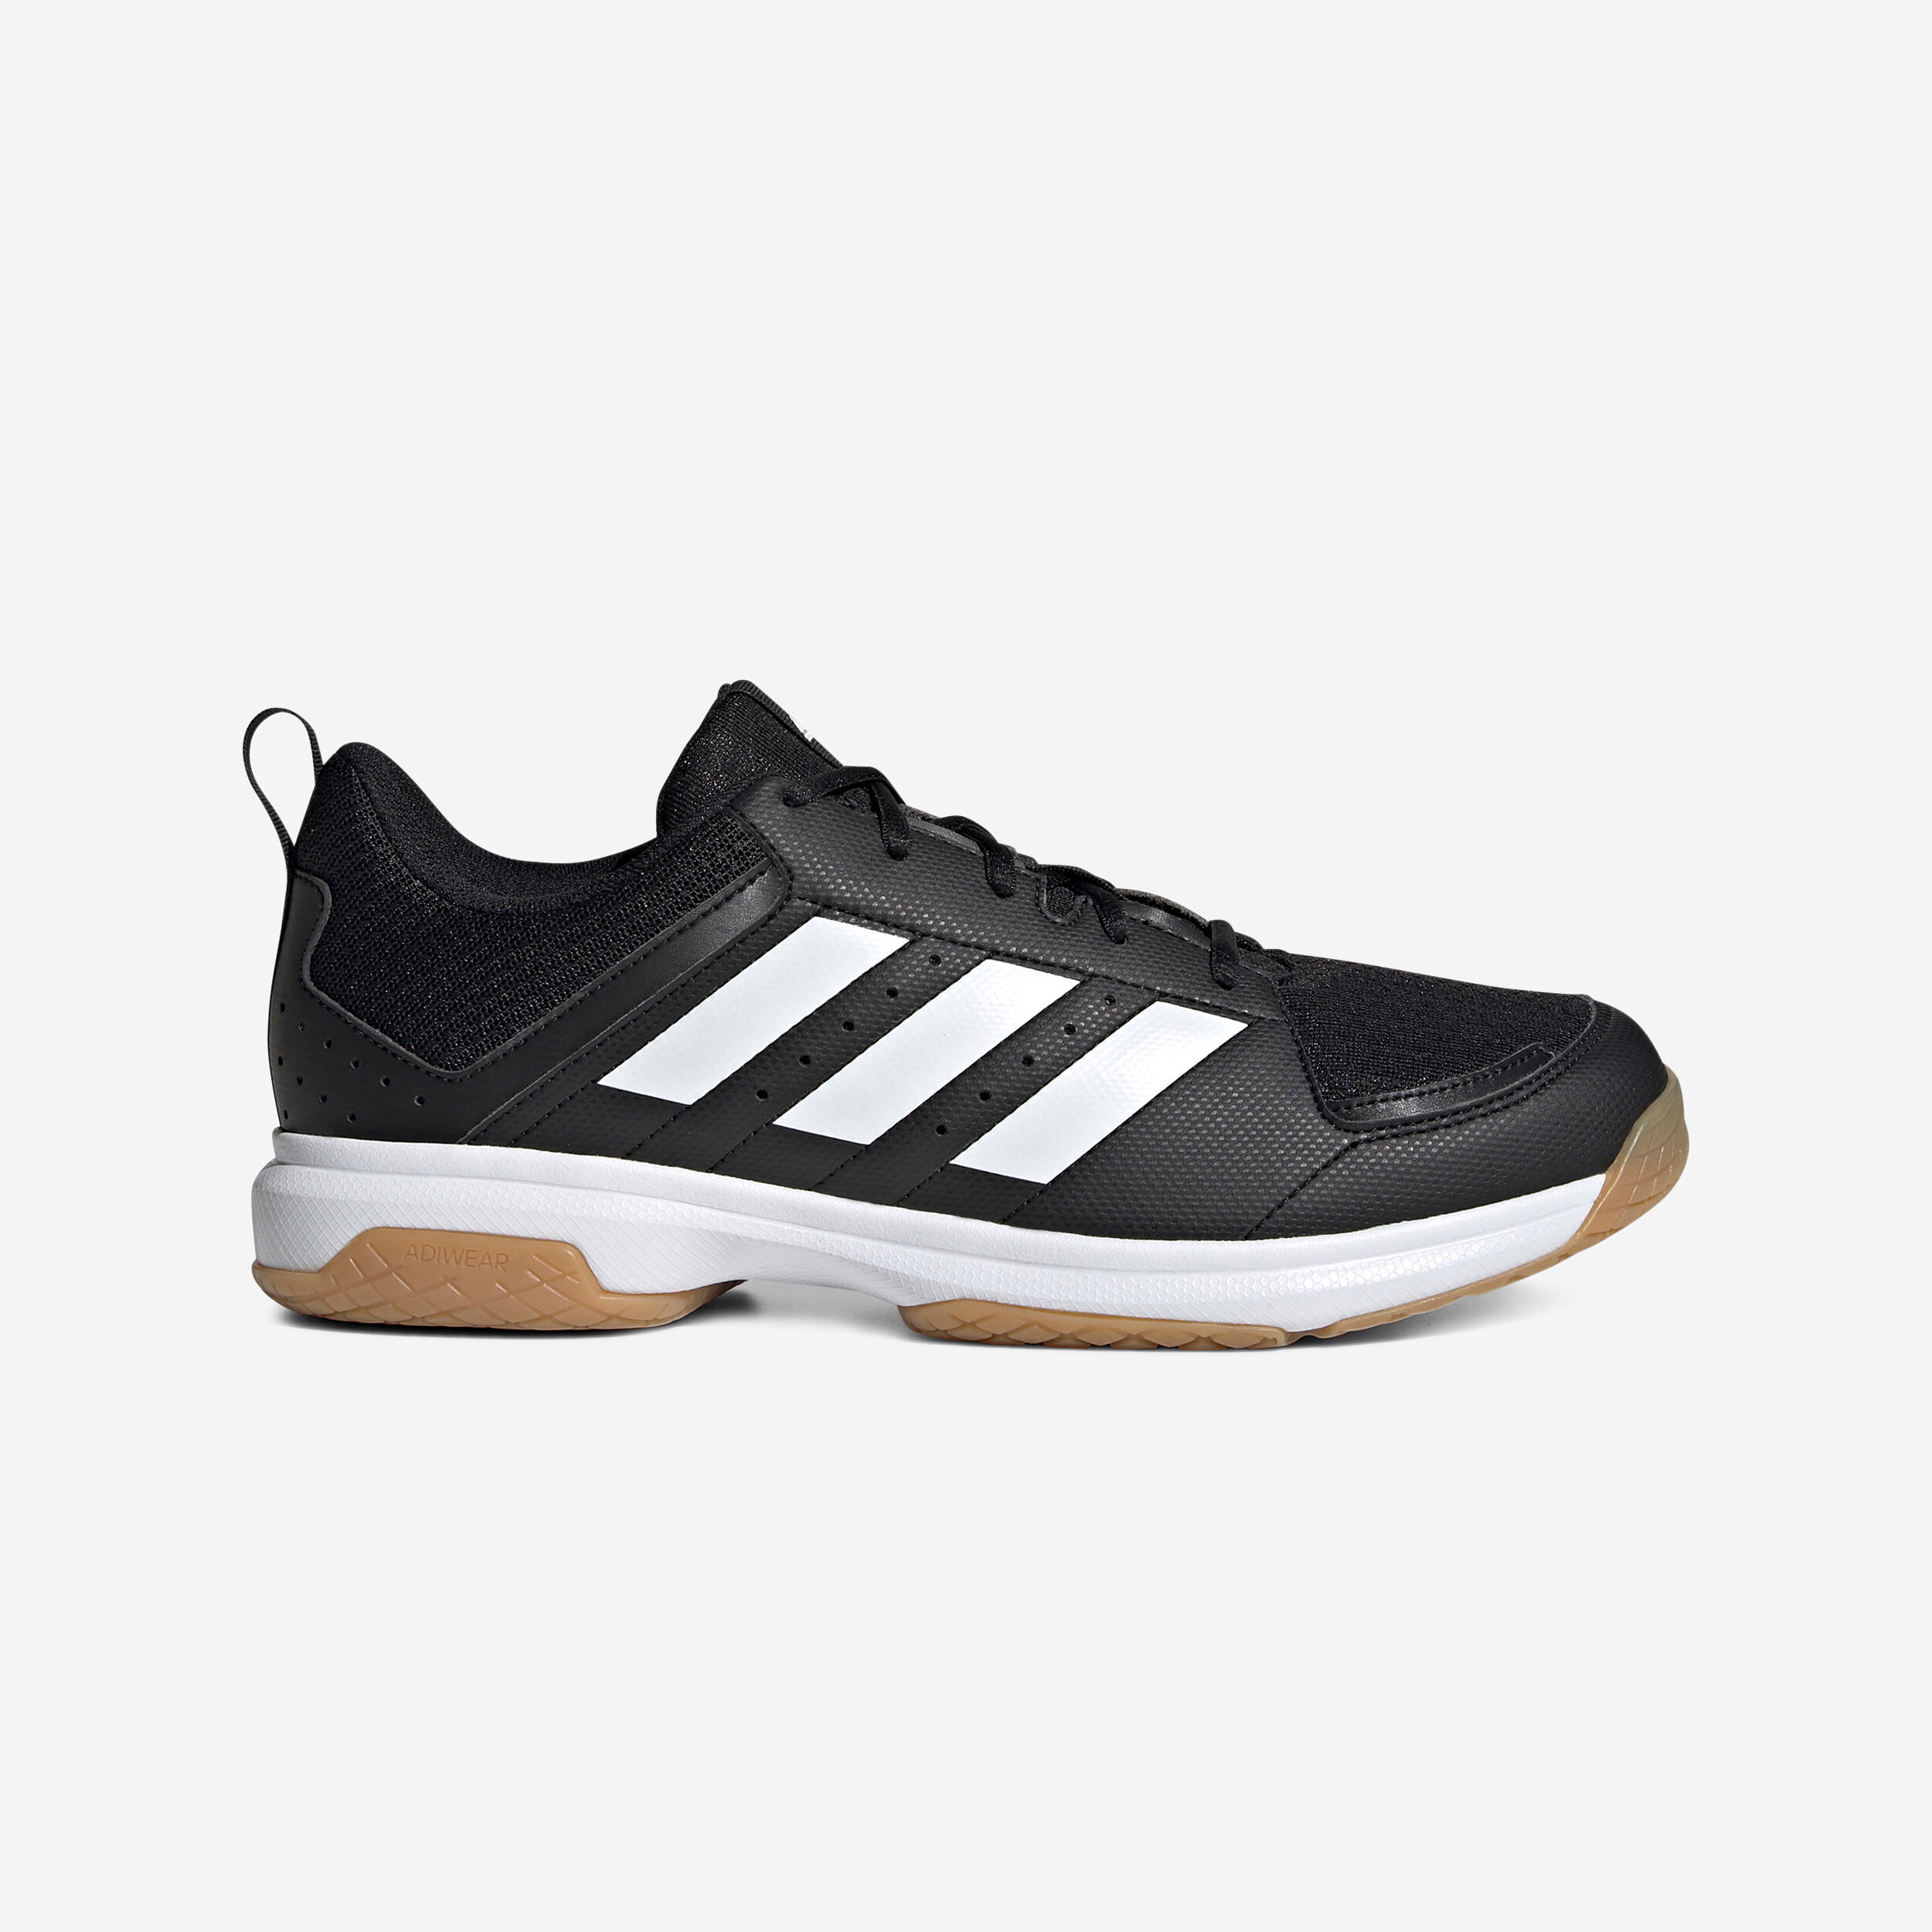 Adidas Adult Handball Shoes Ligra - Black